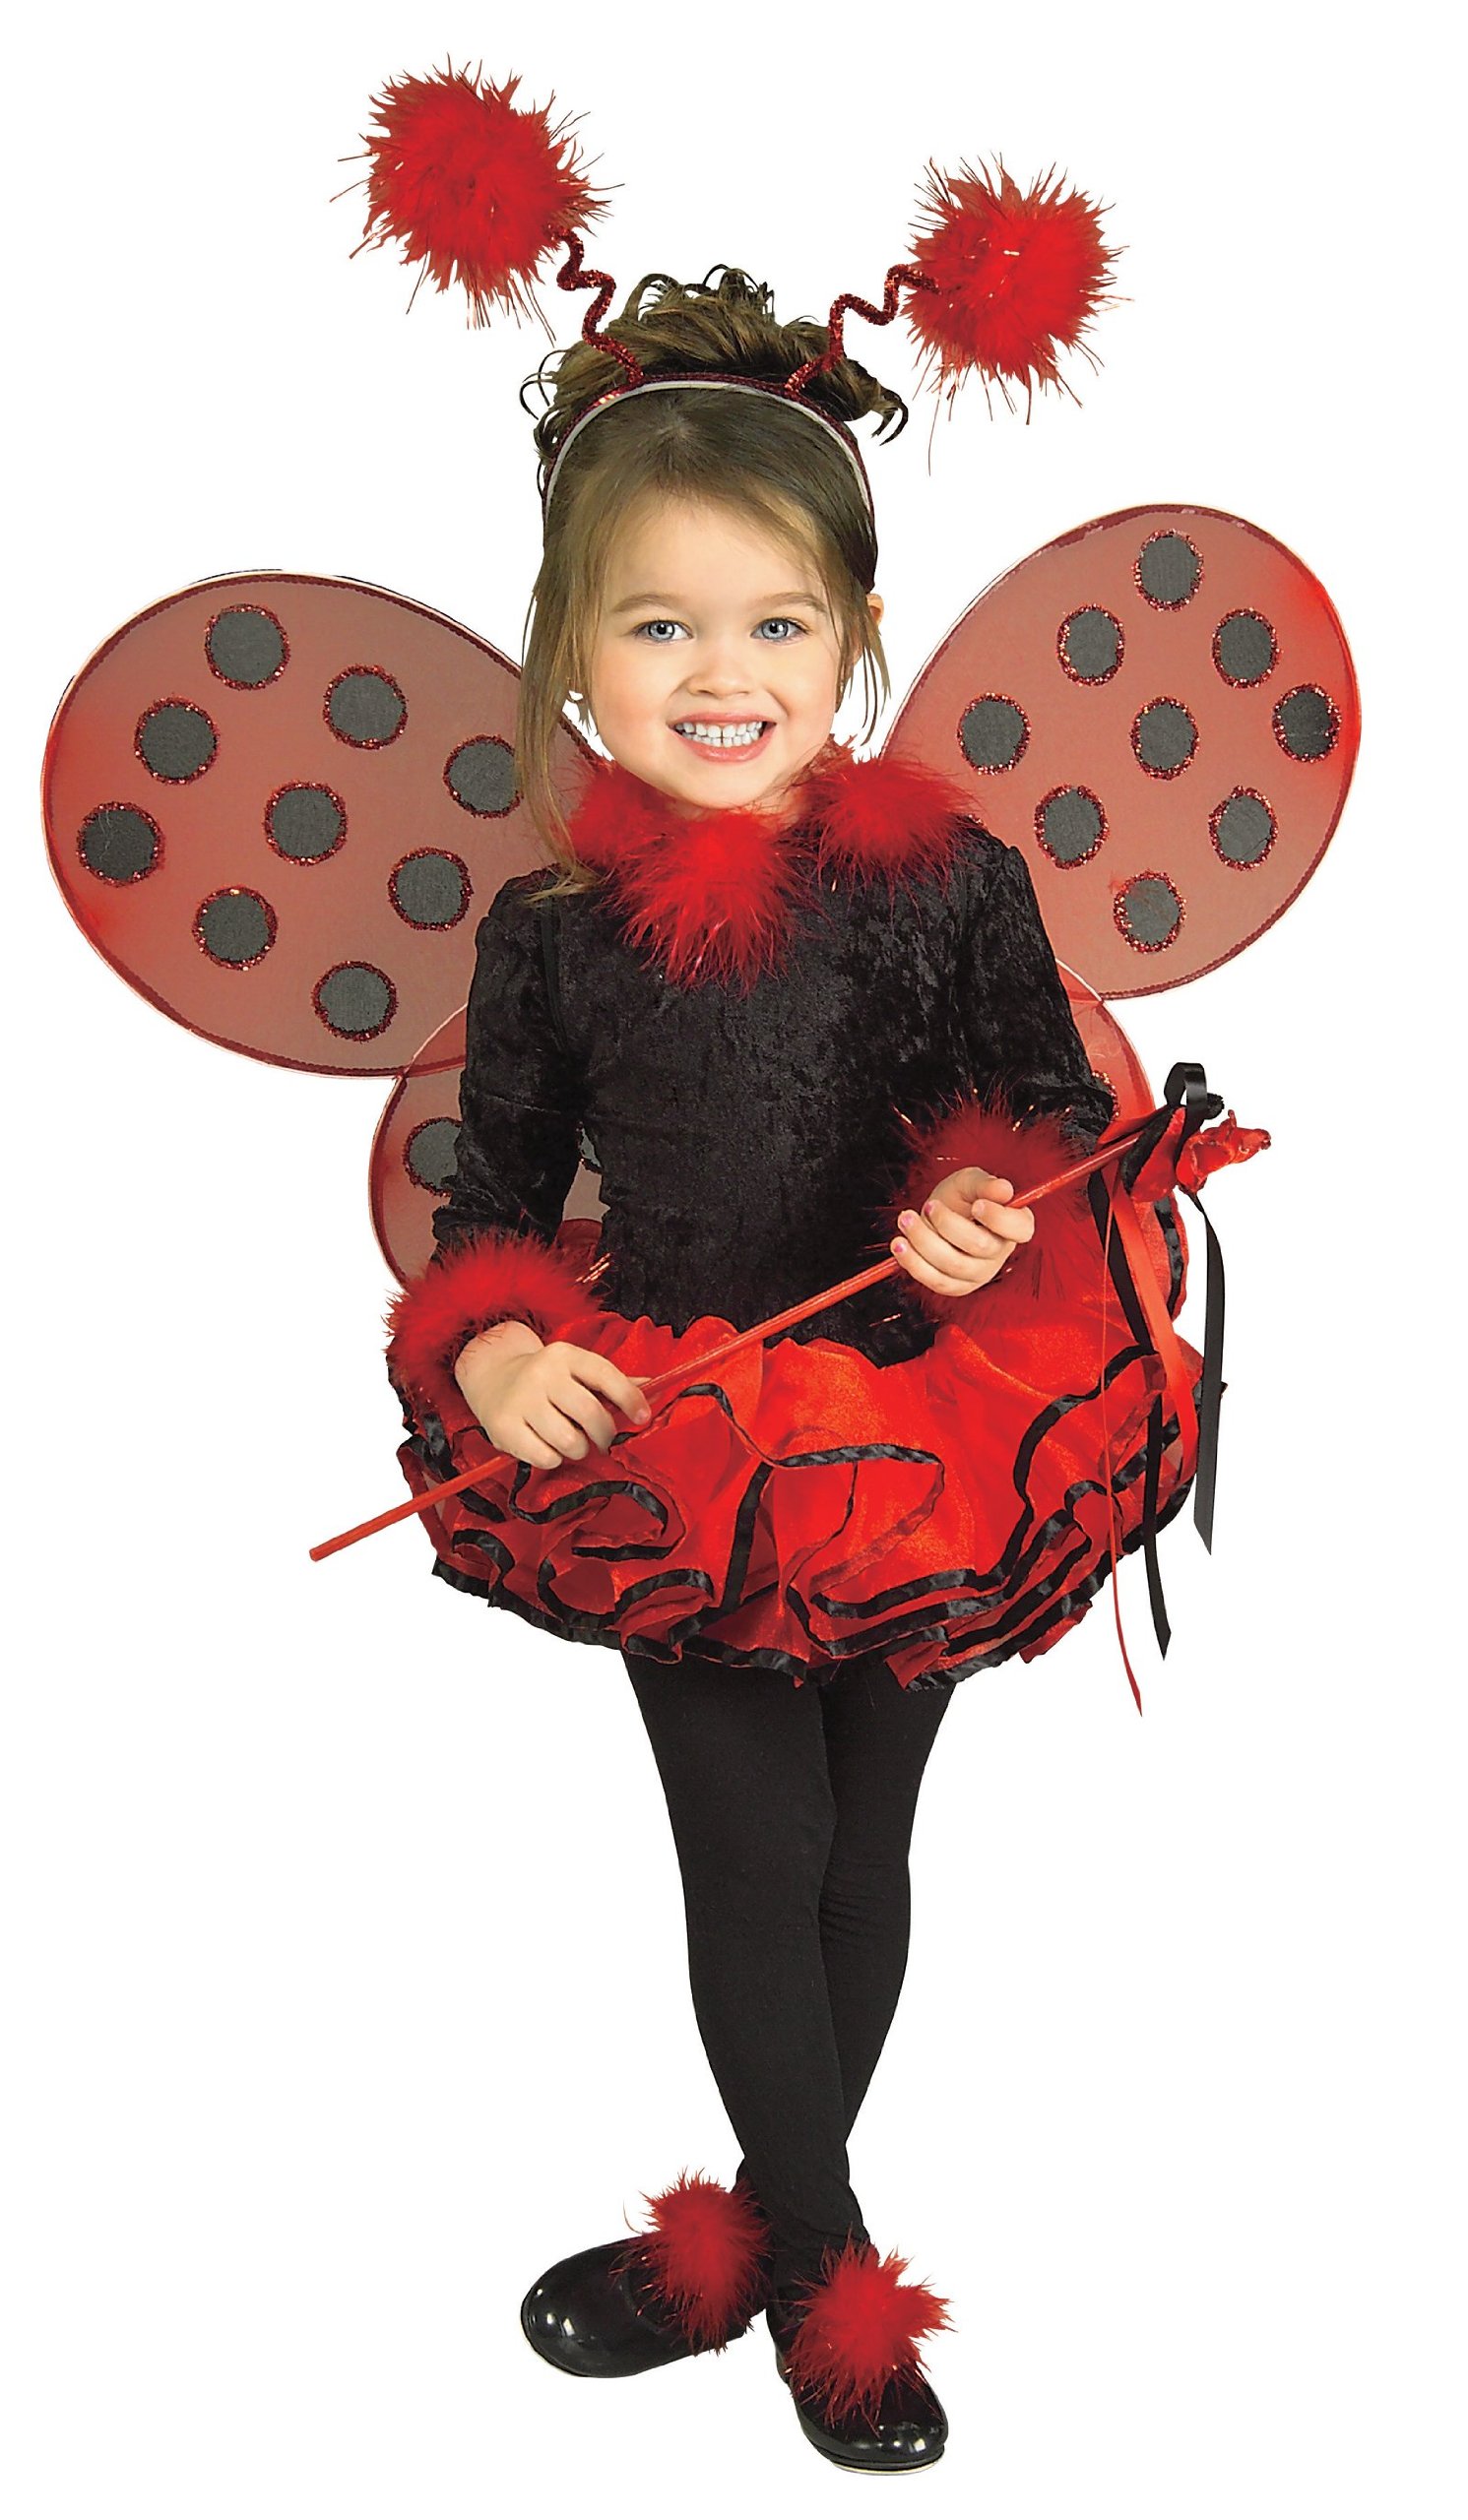 Rubie's Child's Costume, Bumblebee Tutu Costume-Toddler